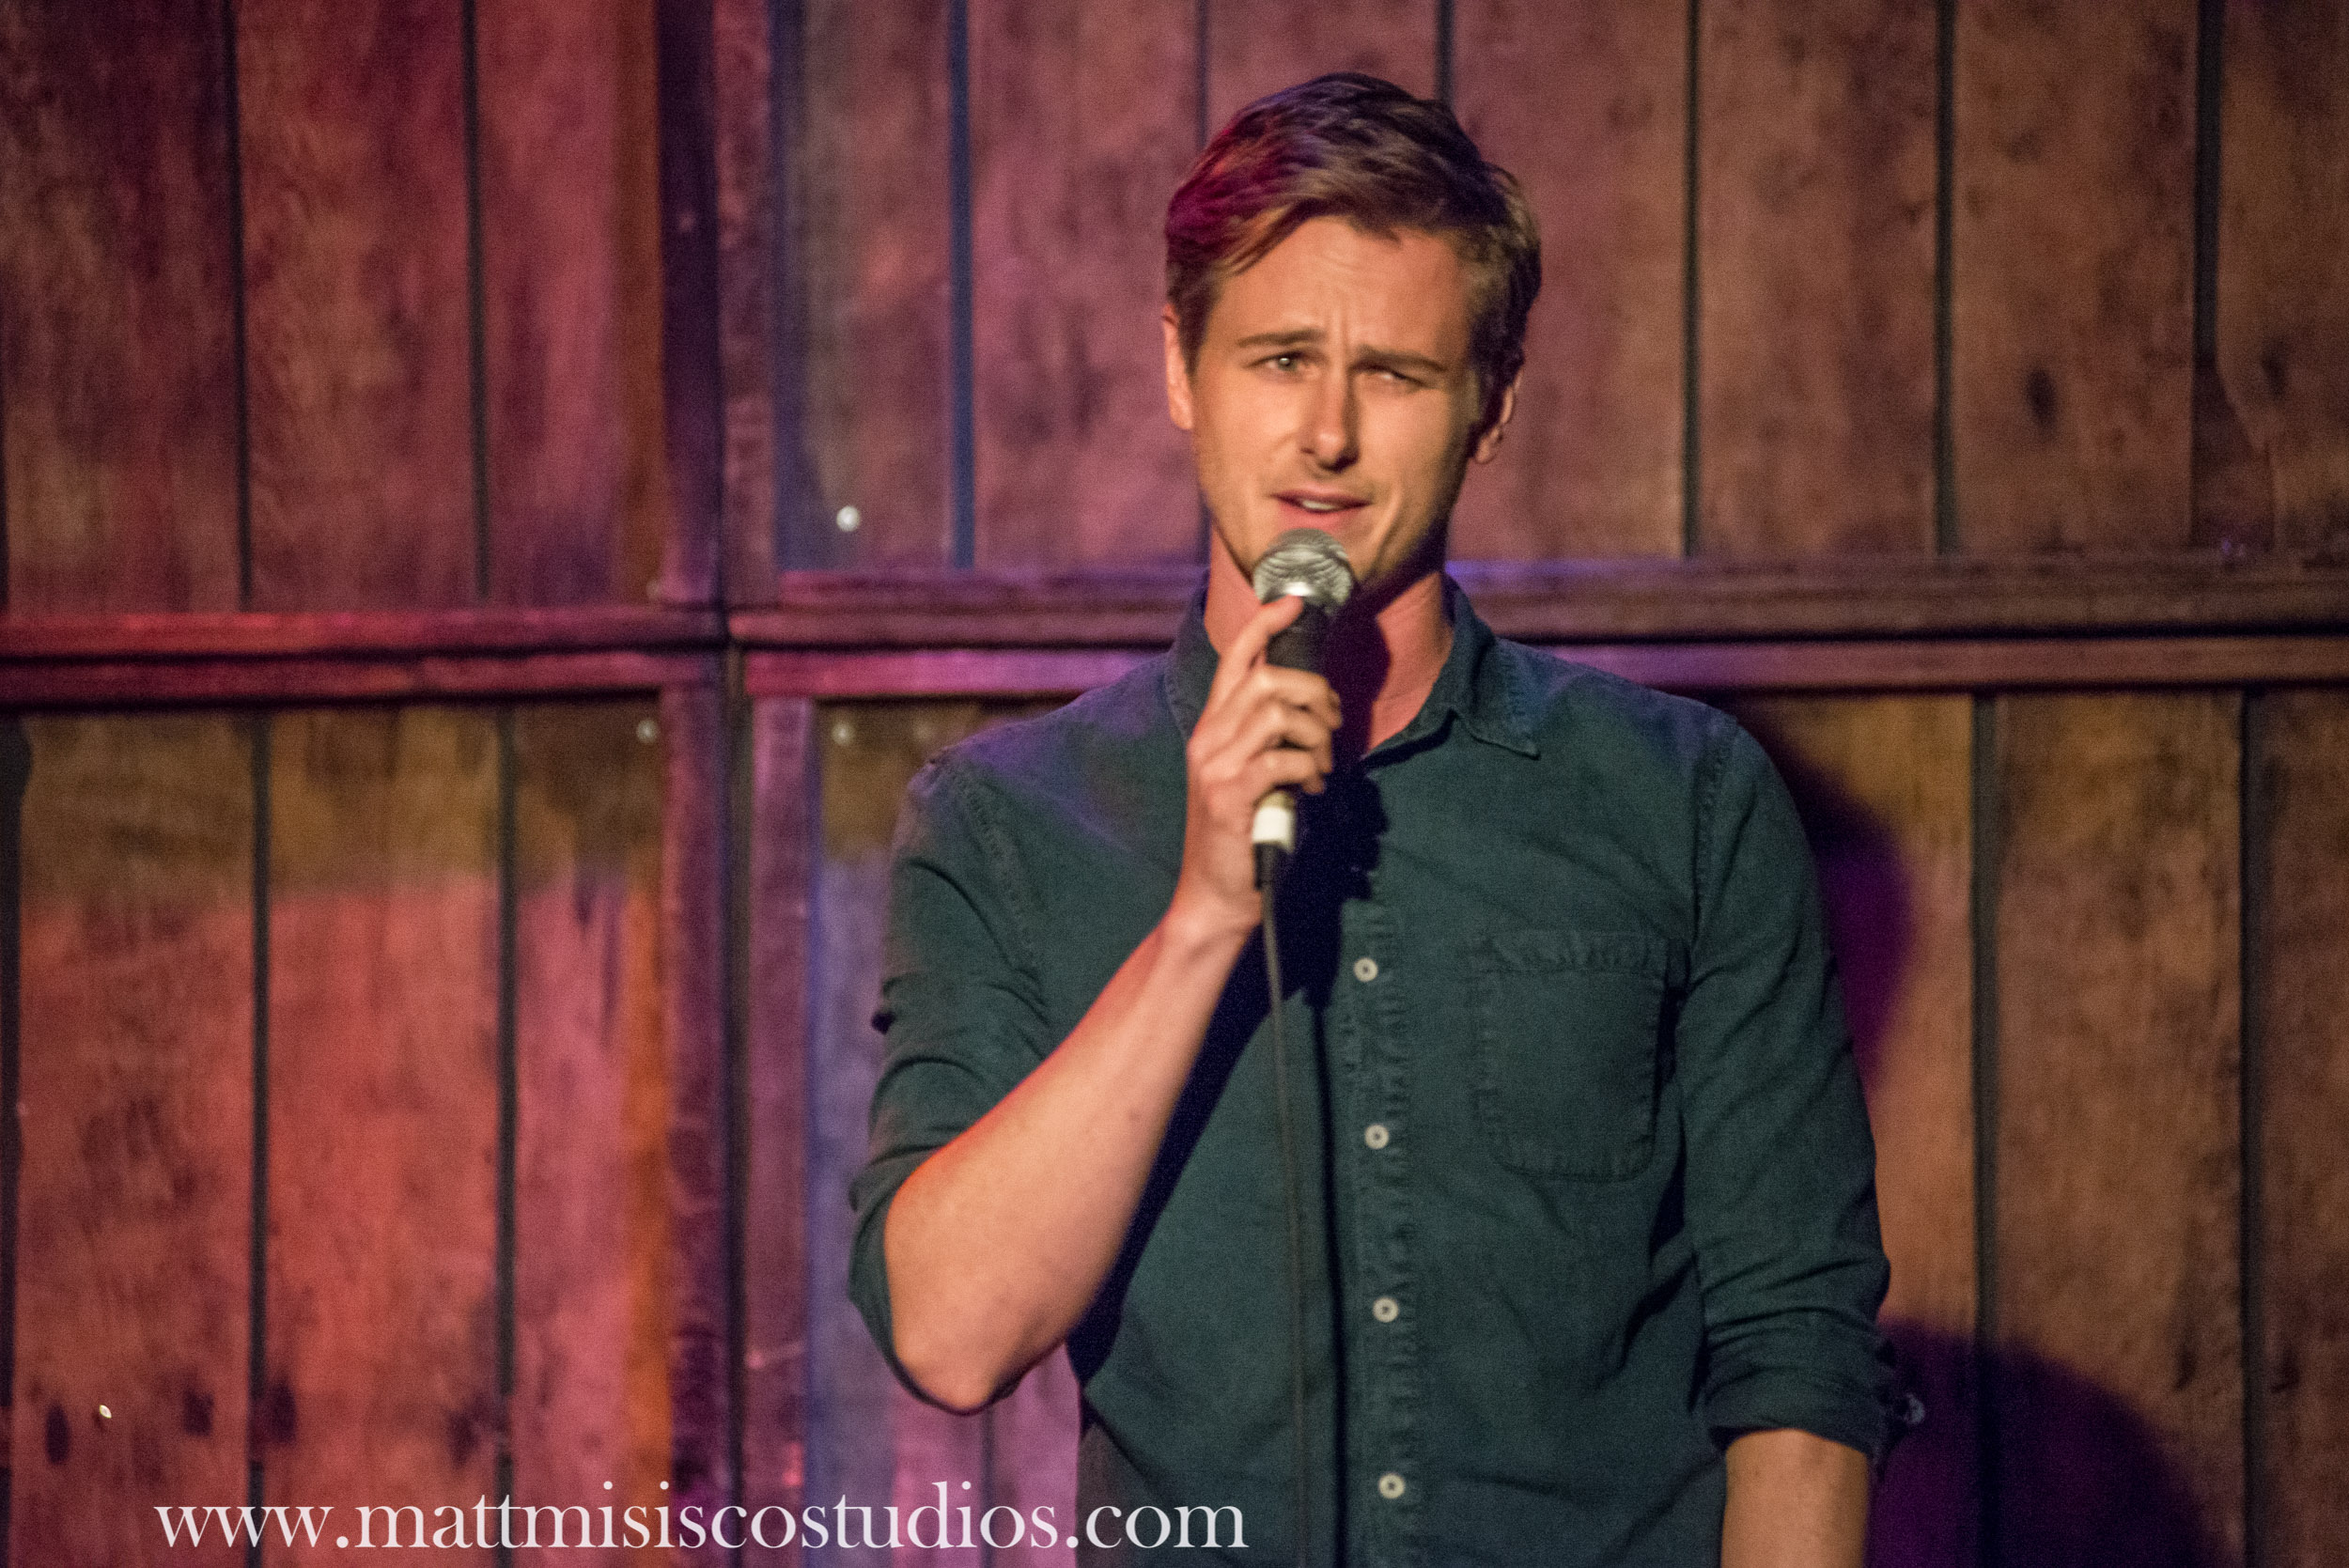 Richard Reid, stand up comedian, at Super Secret Comedy Show, Los Angeles. July 2015